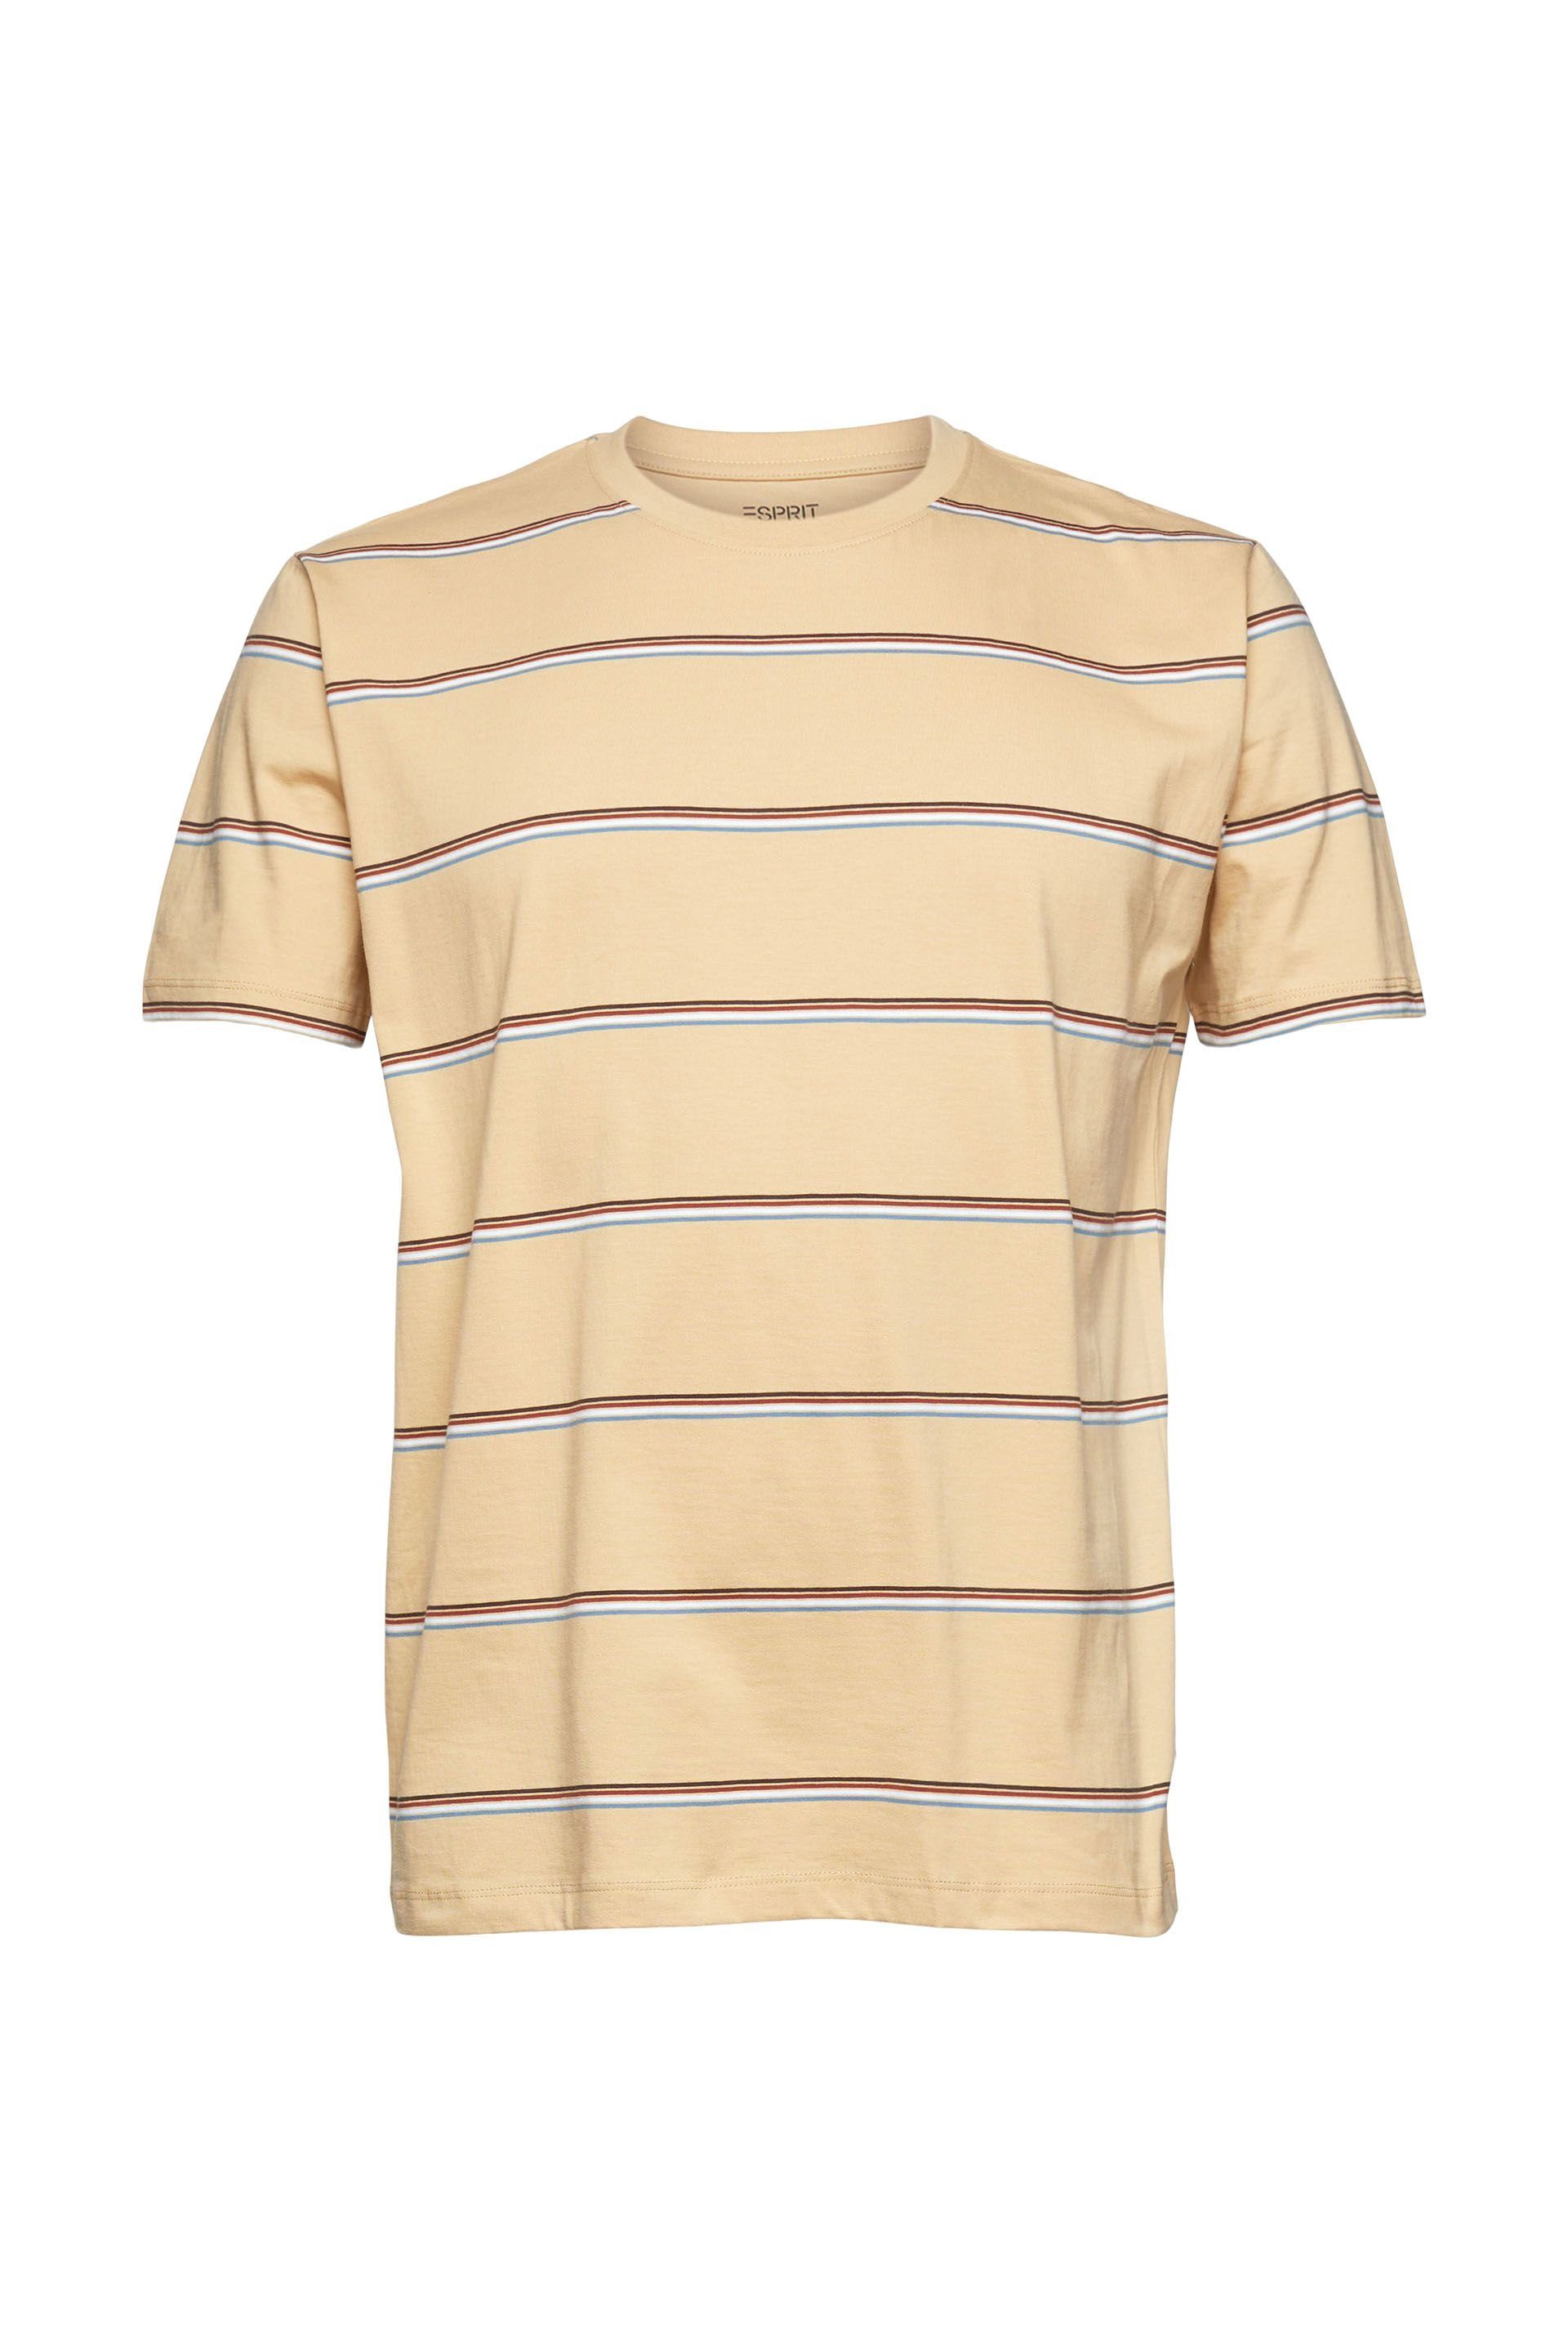 T-Shirt Esprit sand